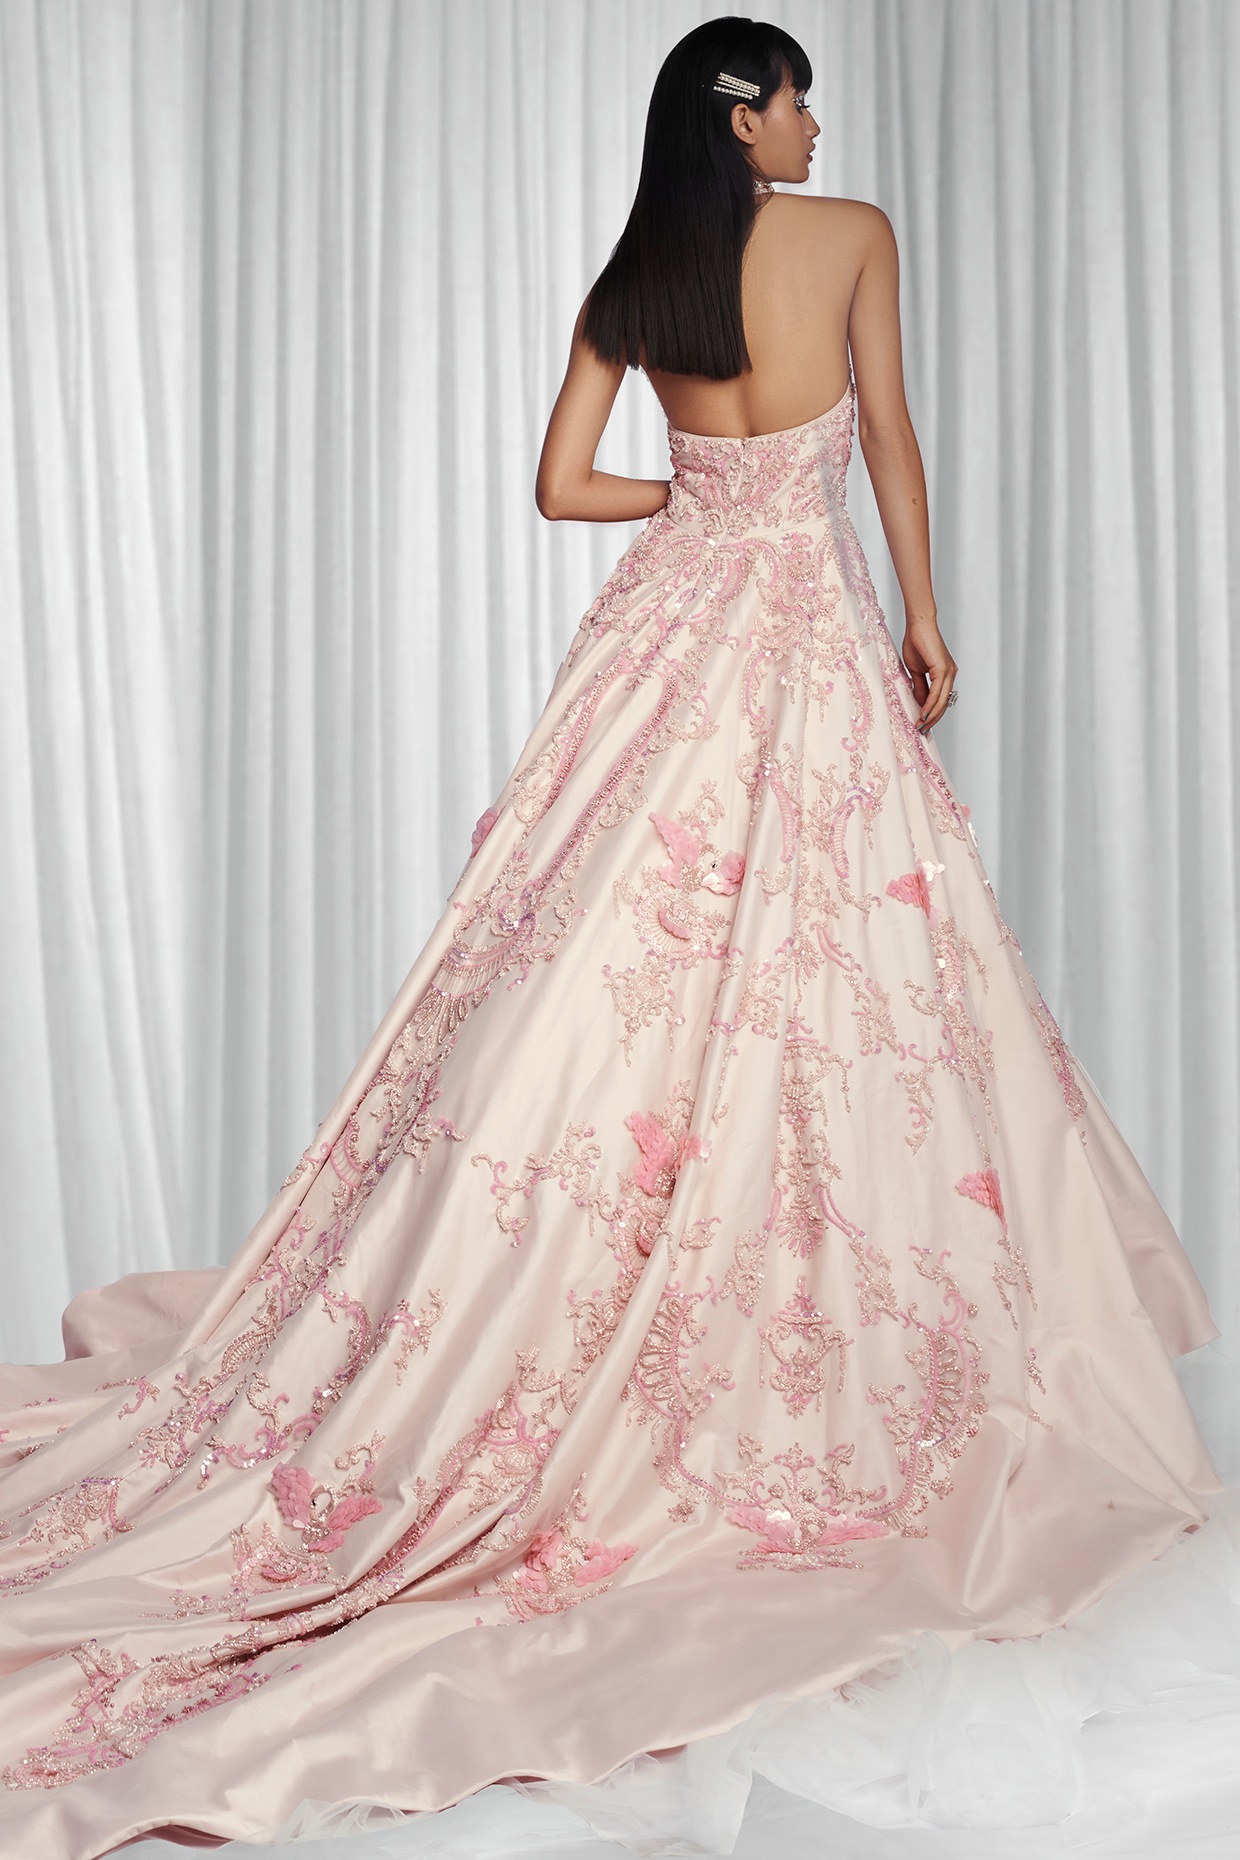 Blush/Pink Luxury Wedding Dresses A-line Princess Lace Long Sleeve Bridal  Gowns | eBay